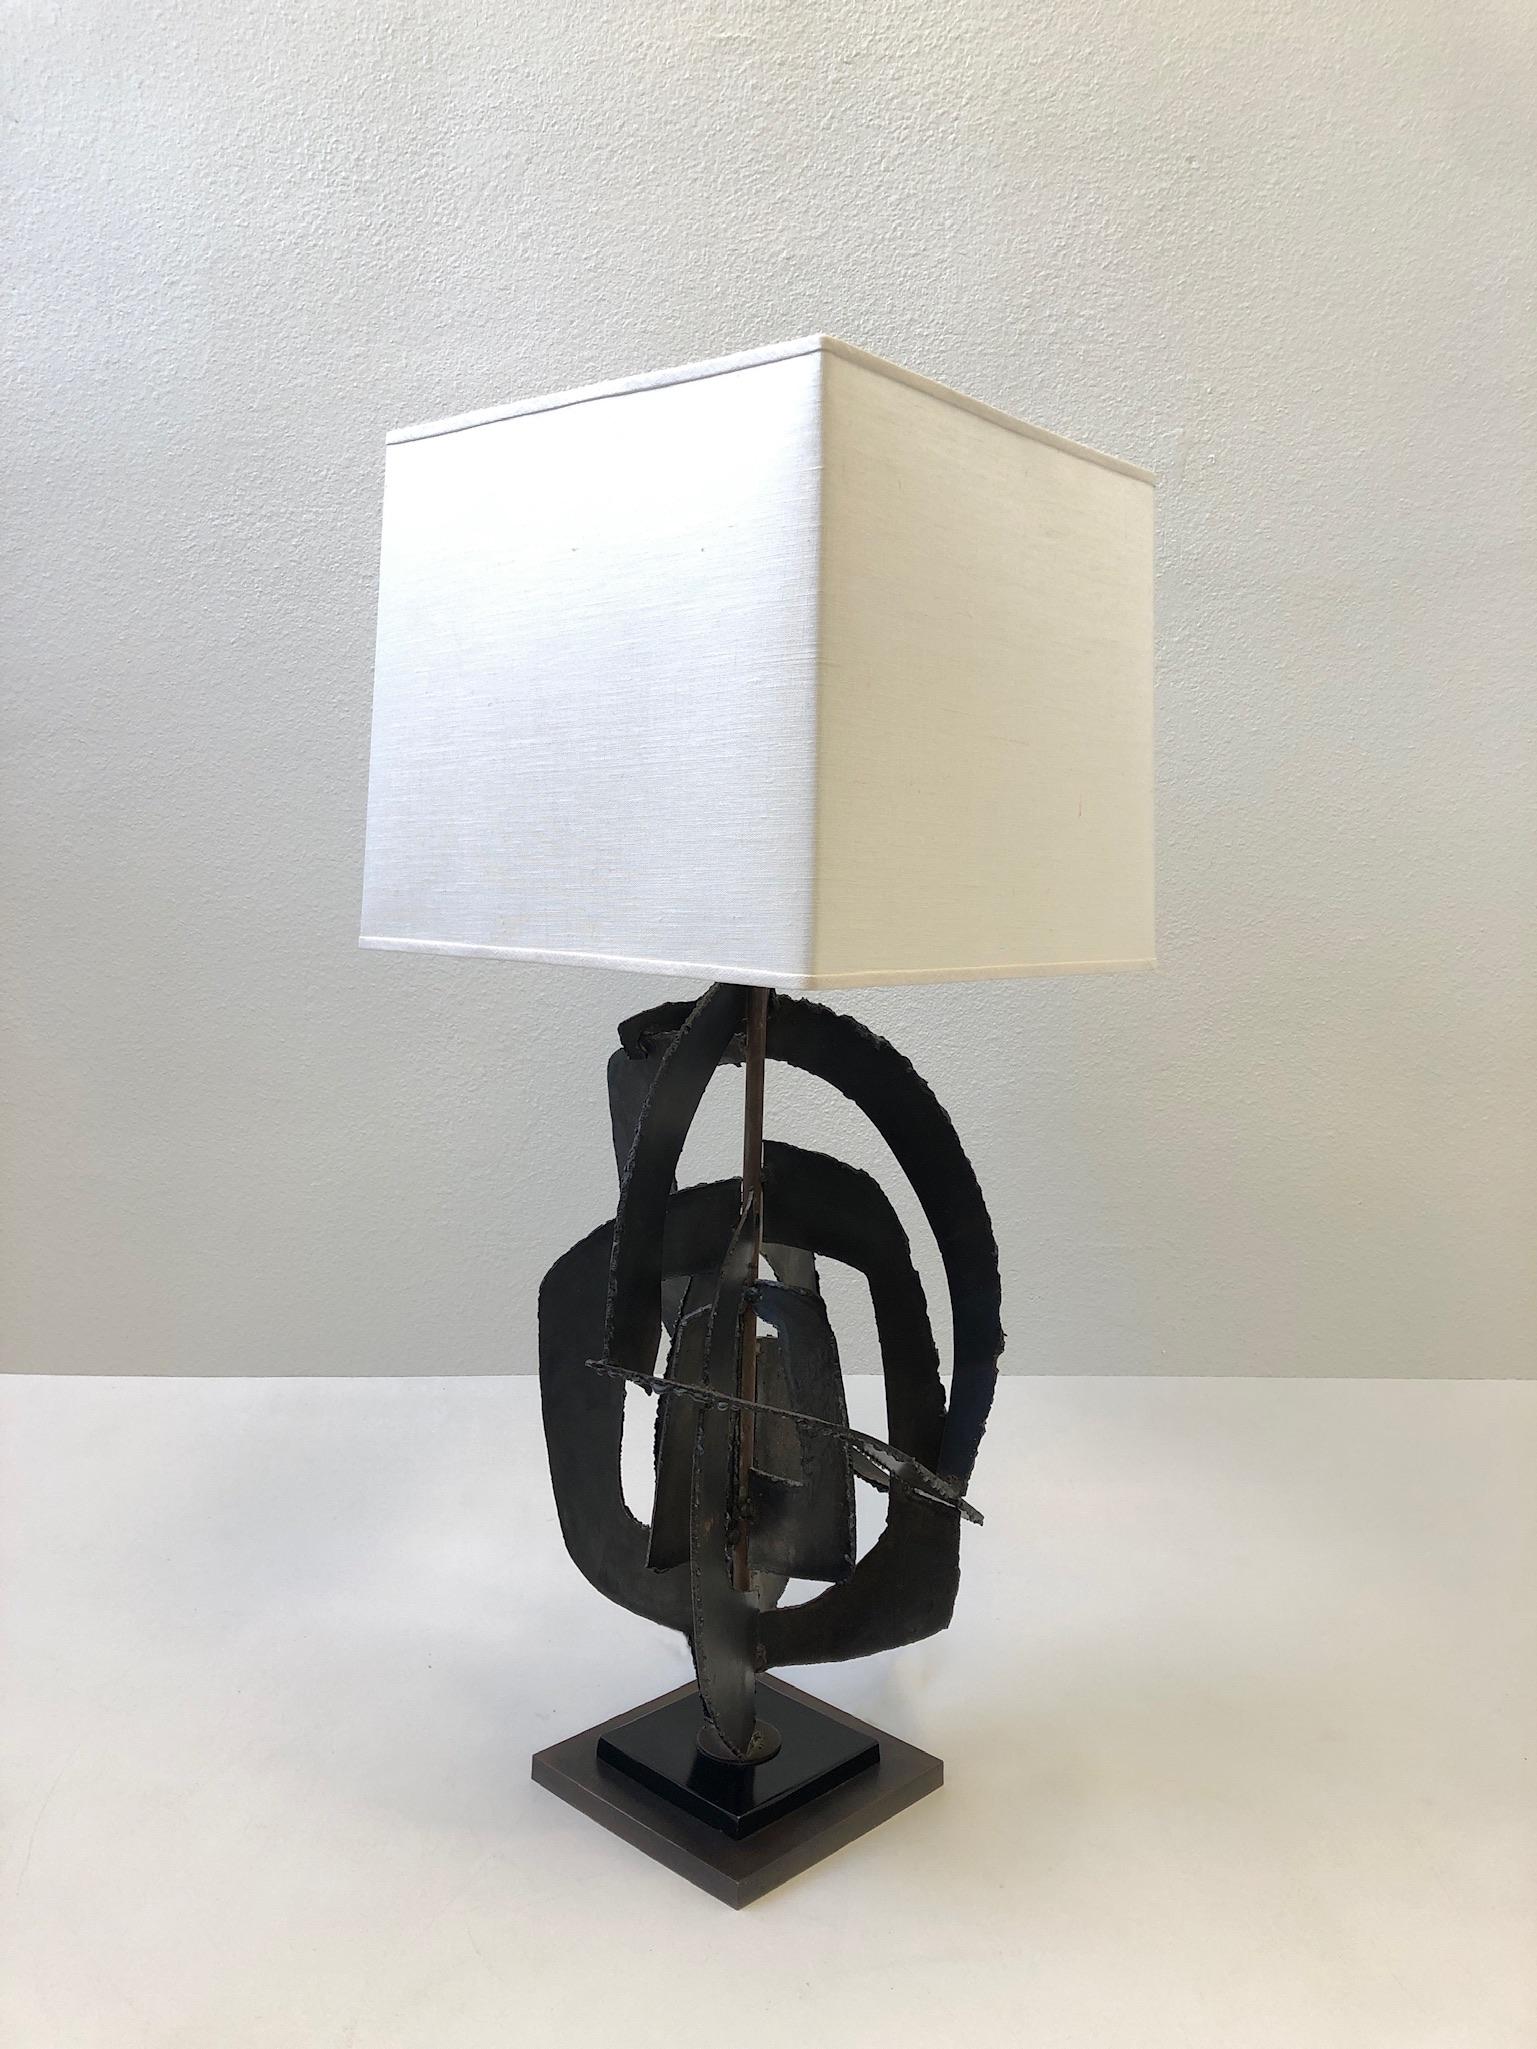 American Sculptural Brutalist Steel Table Lamp by Richard Barr for Laurel Lamp Co